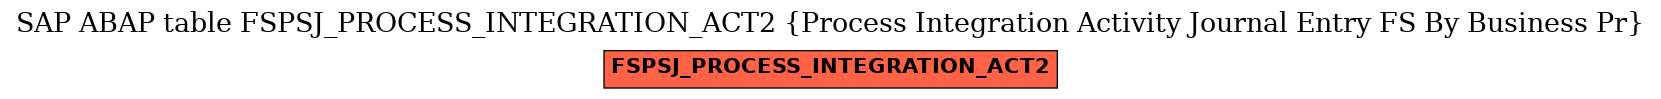 E-R Diagram for table FSPSJ_PROCESS_INTEGRATION_ACT2 (Process Integration Activity Journal Entry FS By Business Pr)